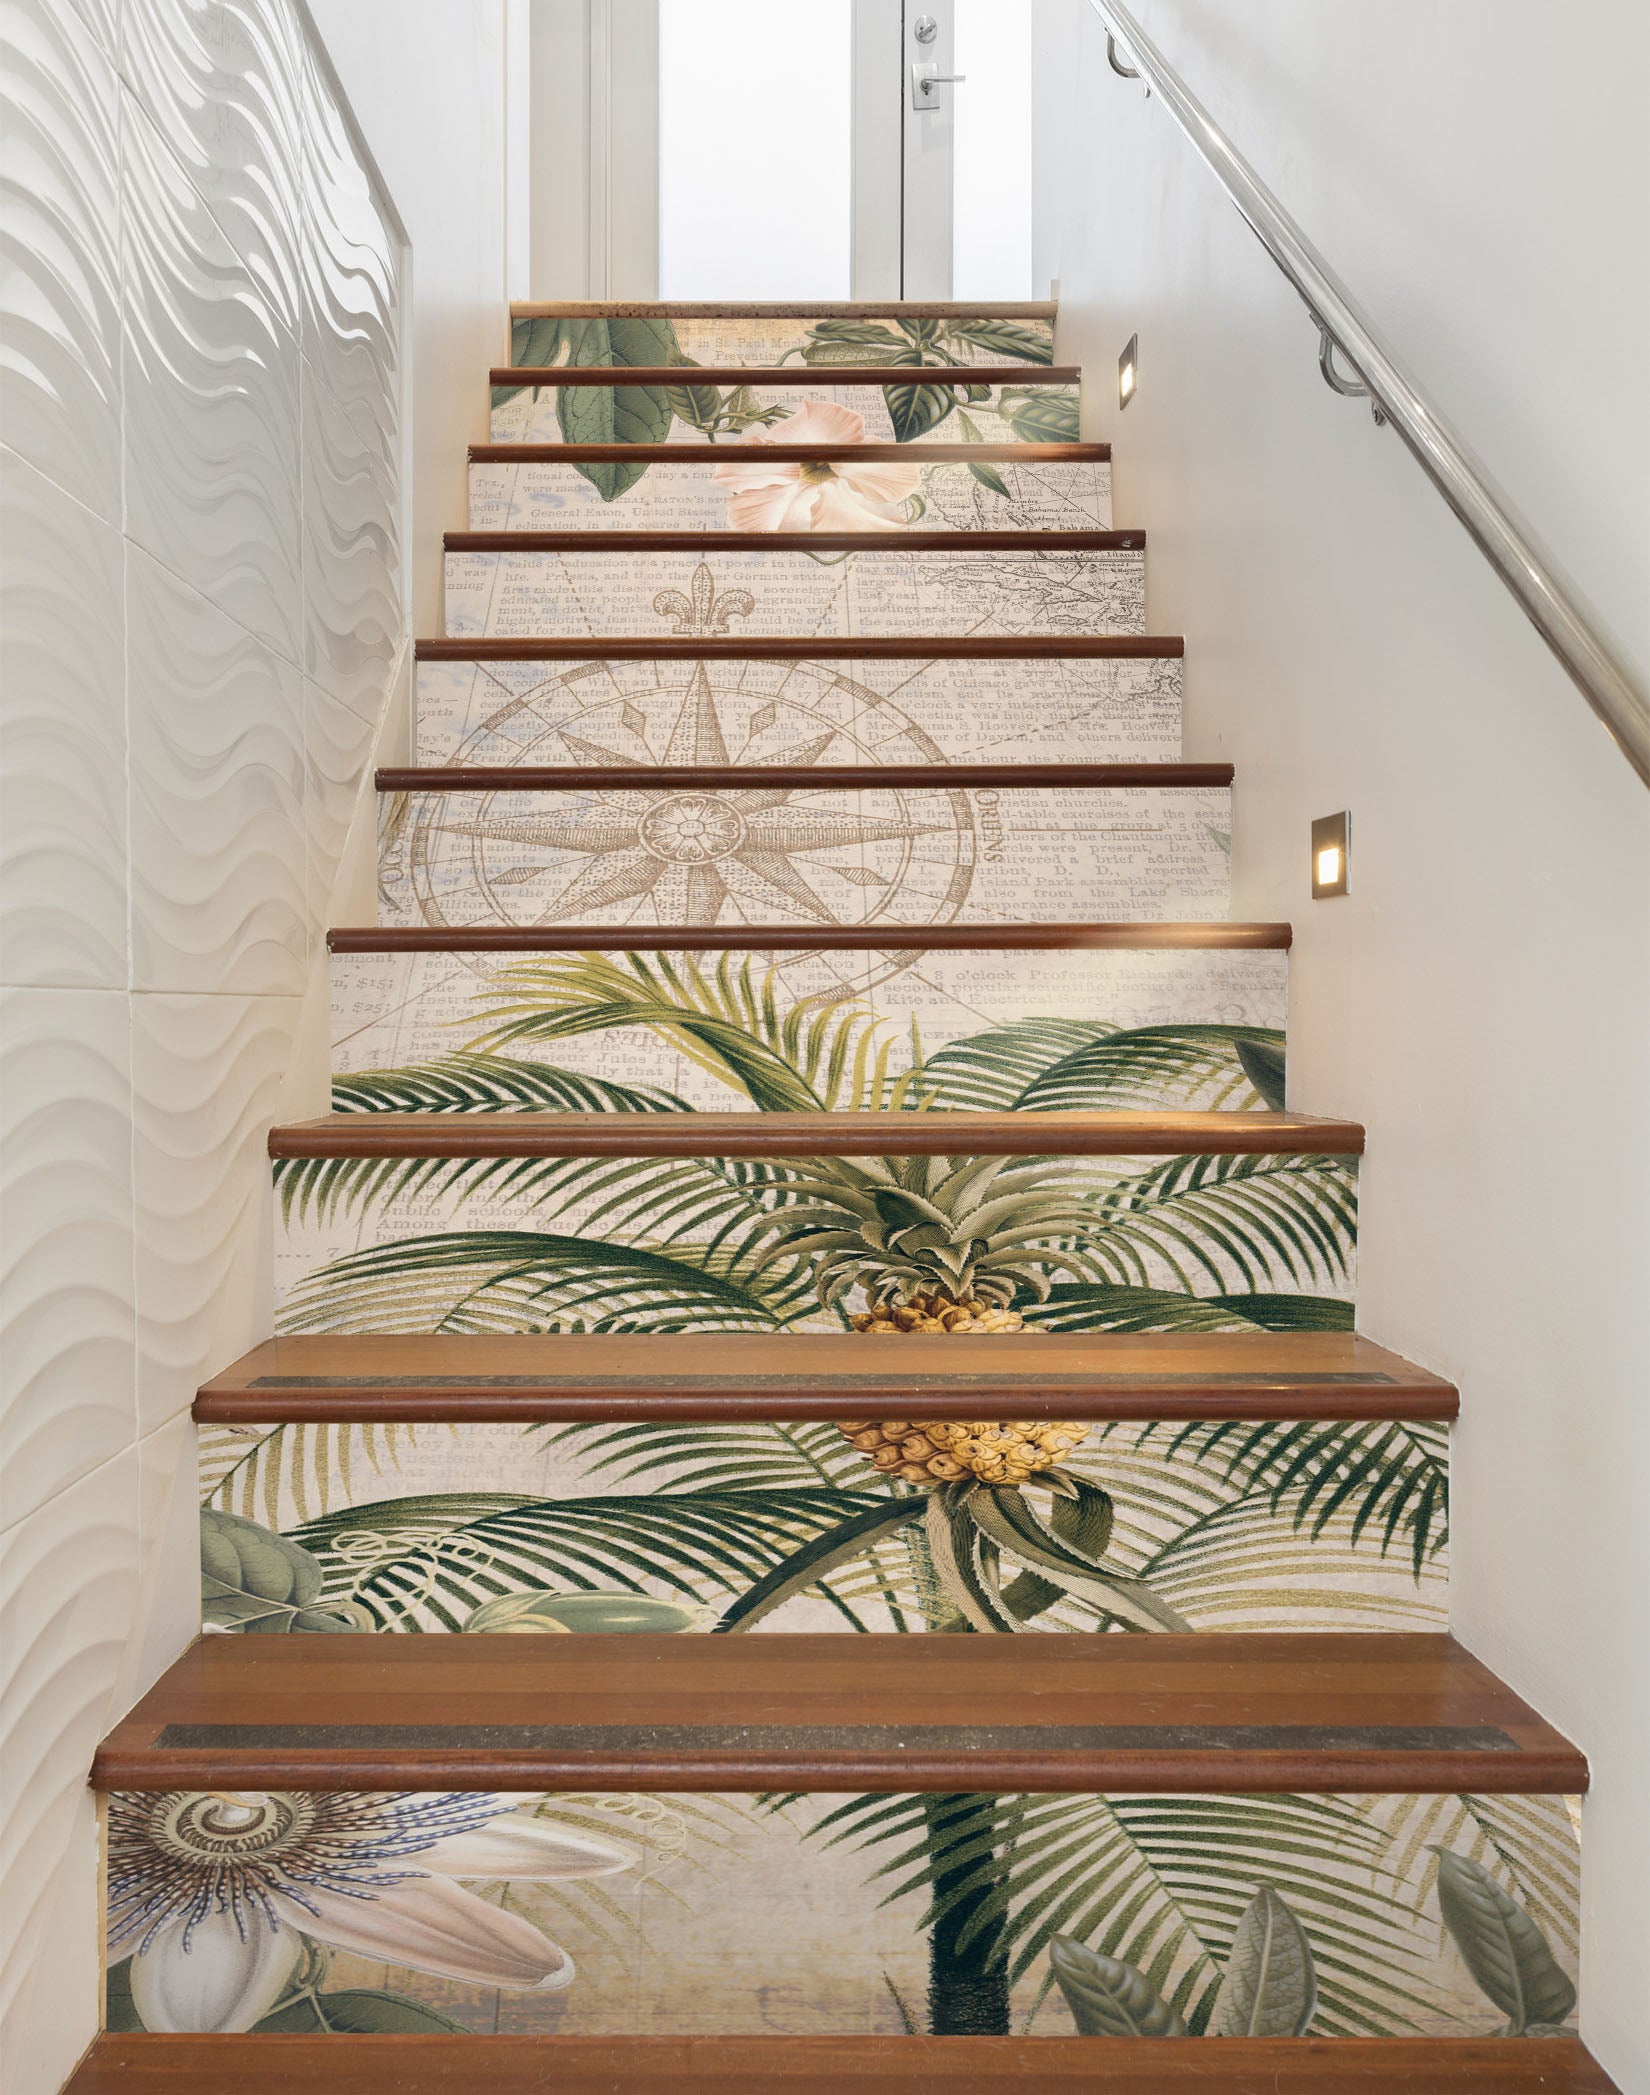 3D Tree Pineapple 11049 Andrea Haase Stair Risers